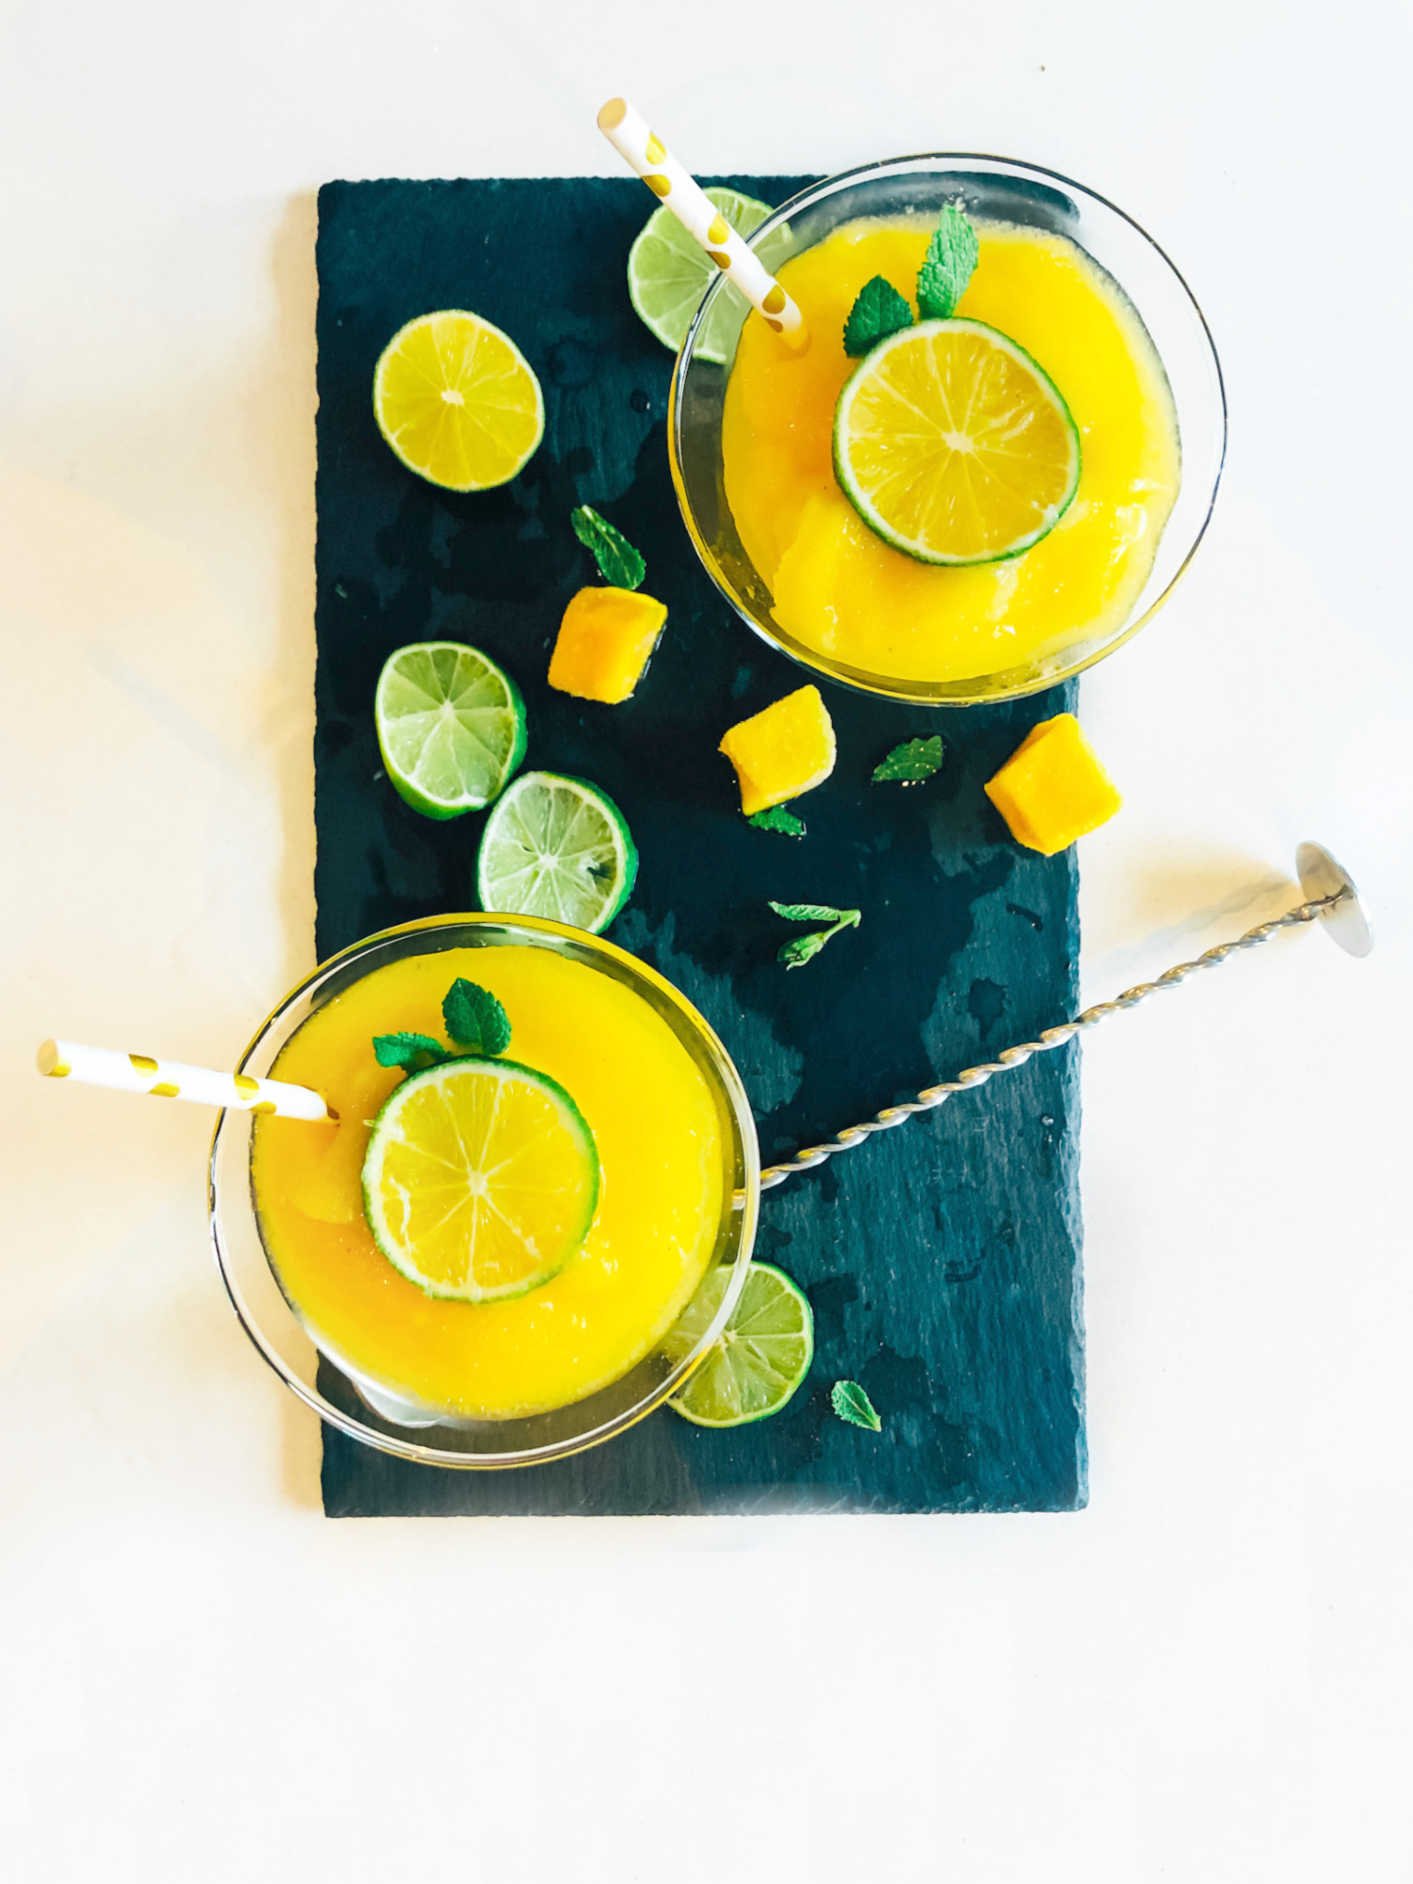 Frozen cocktail ideas, the frozen vodka and mango slush made with frozen mango and juice